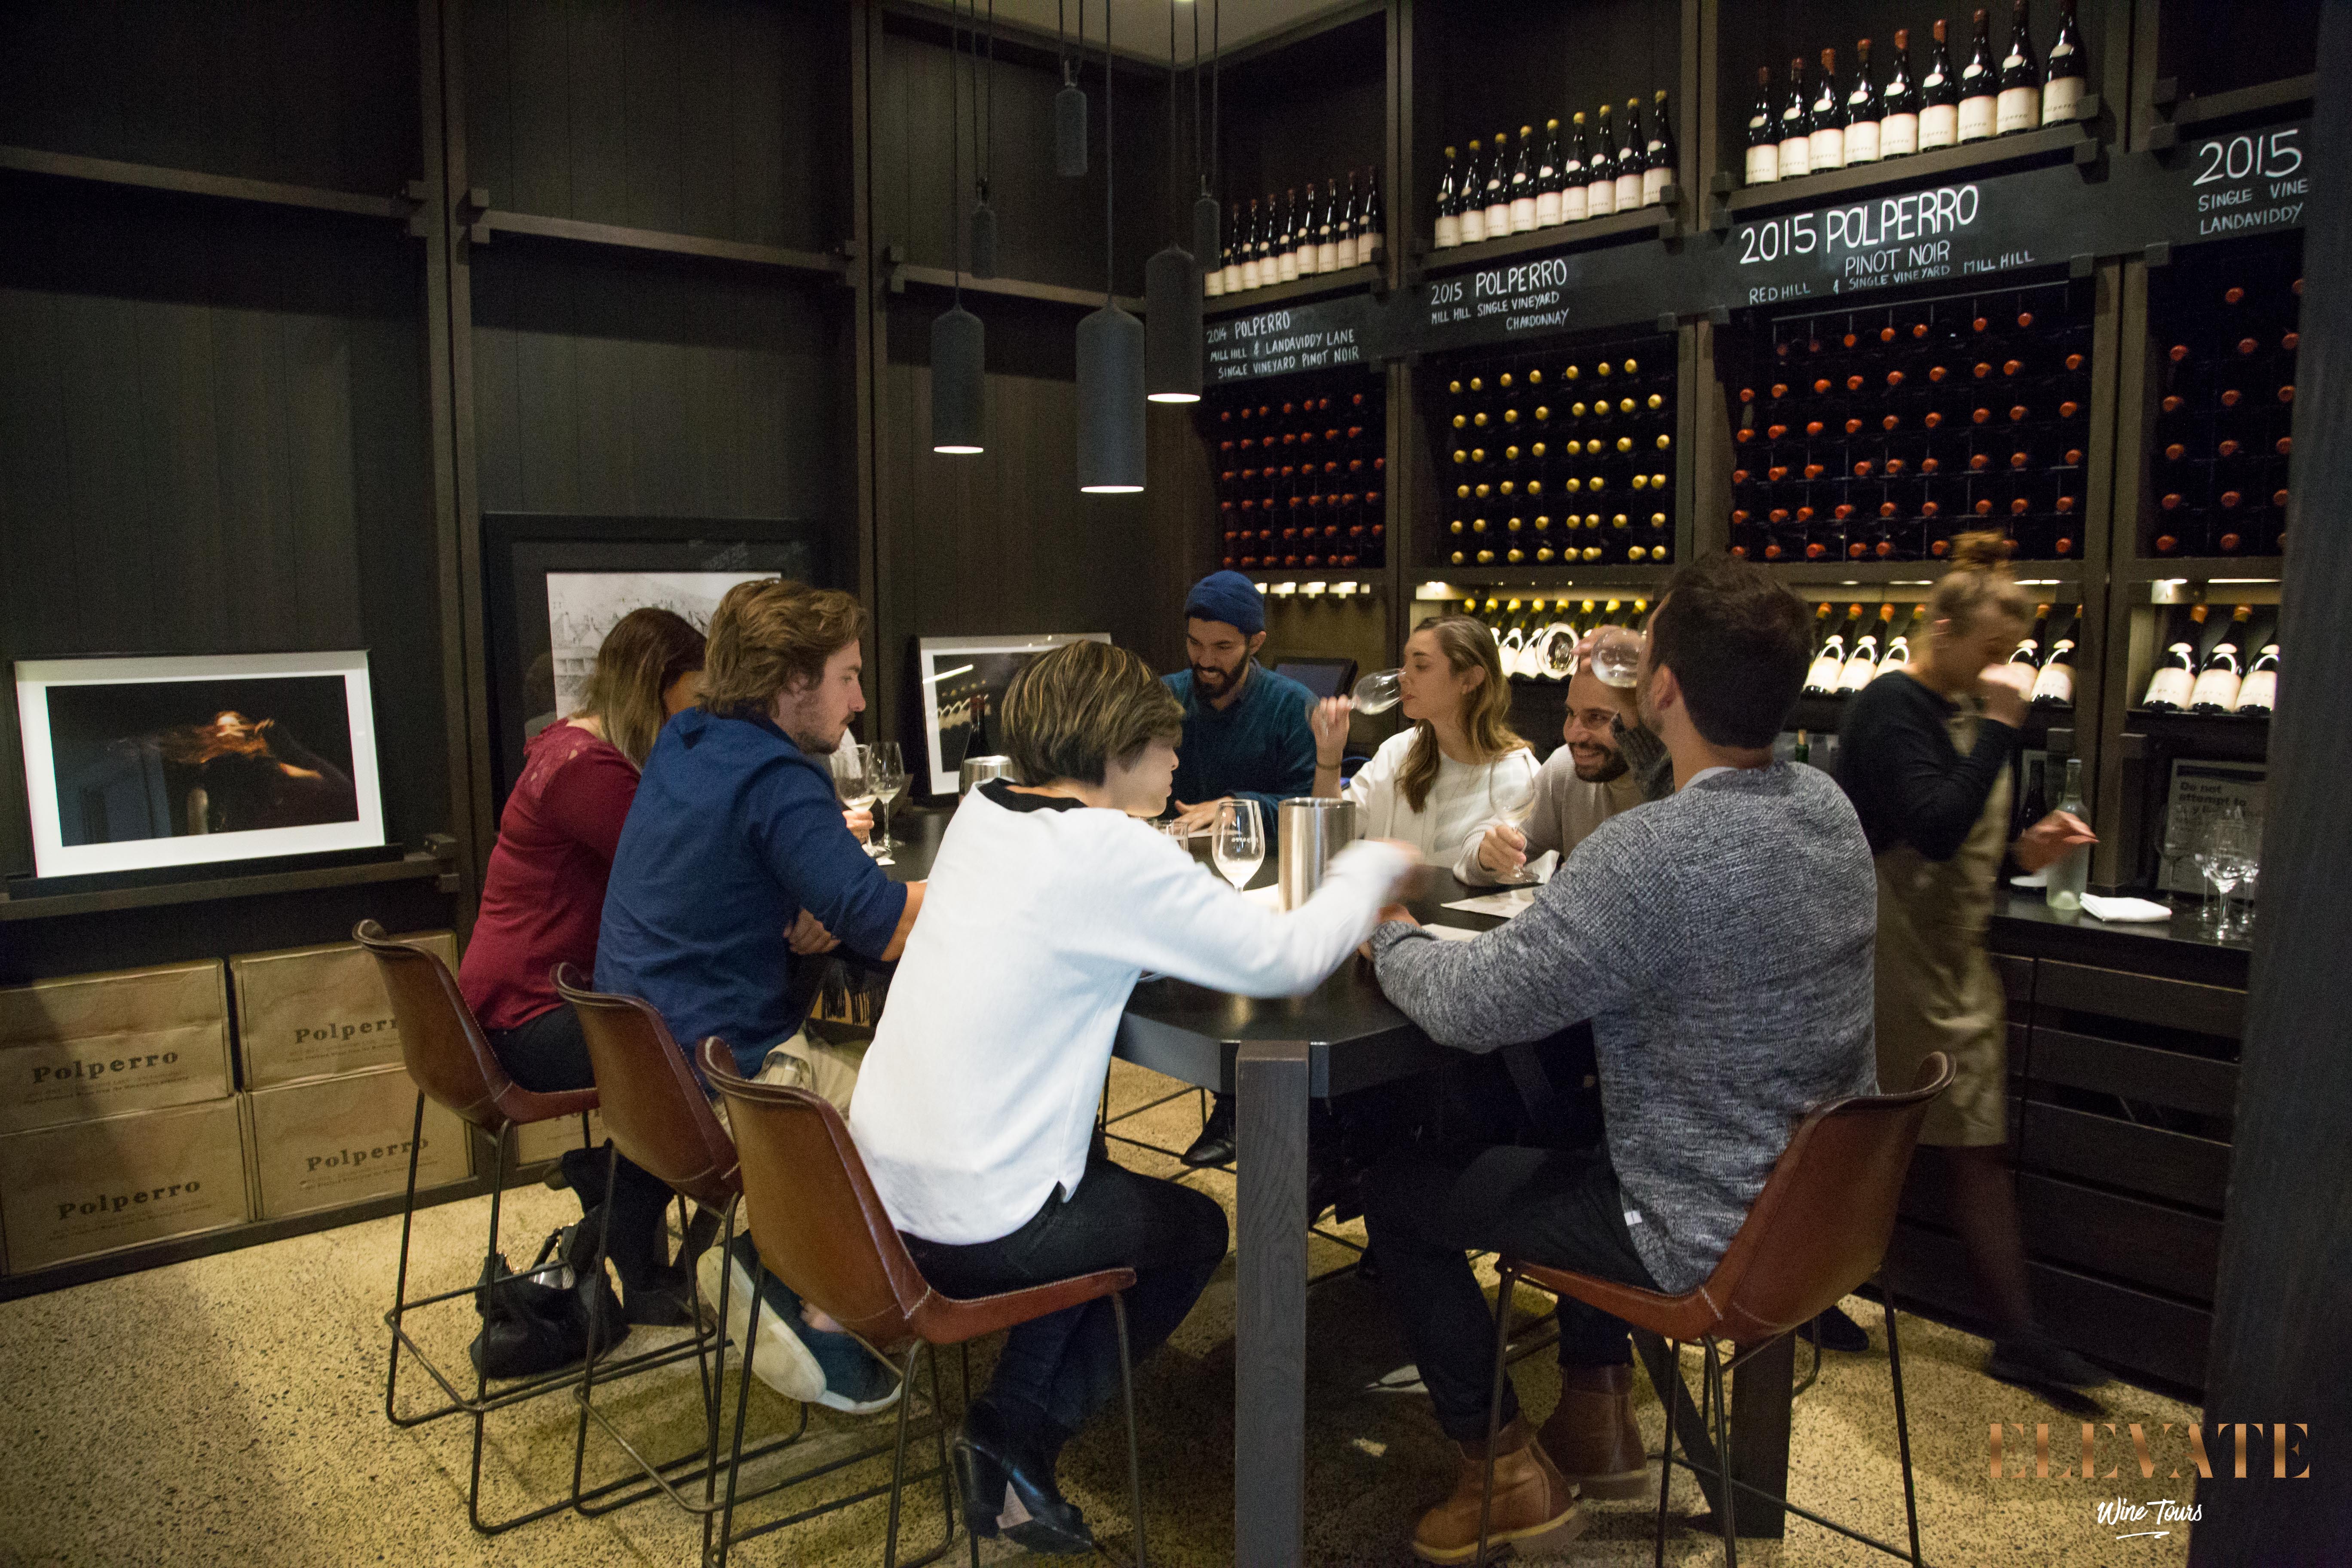 Wine Tour group tasting wine at Polperro Cellar Door on the Mornington Pensinsula